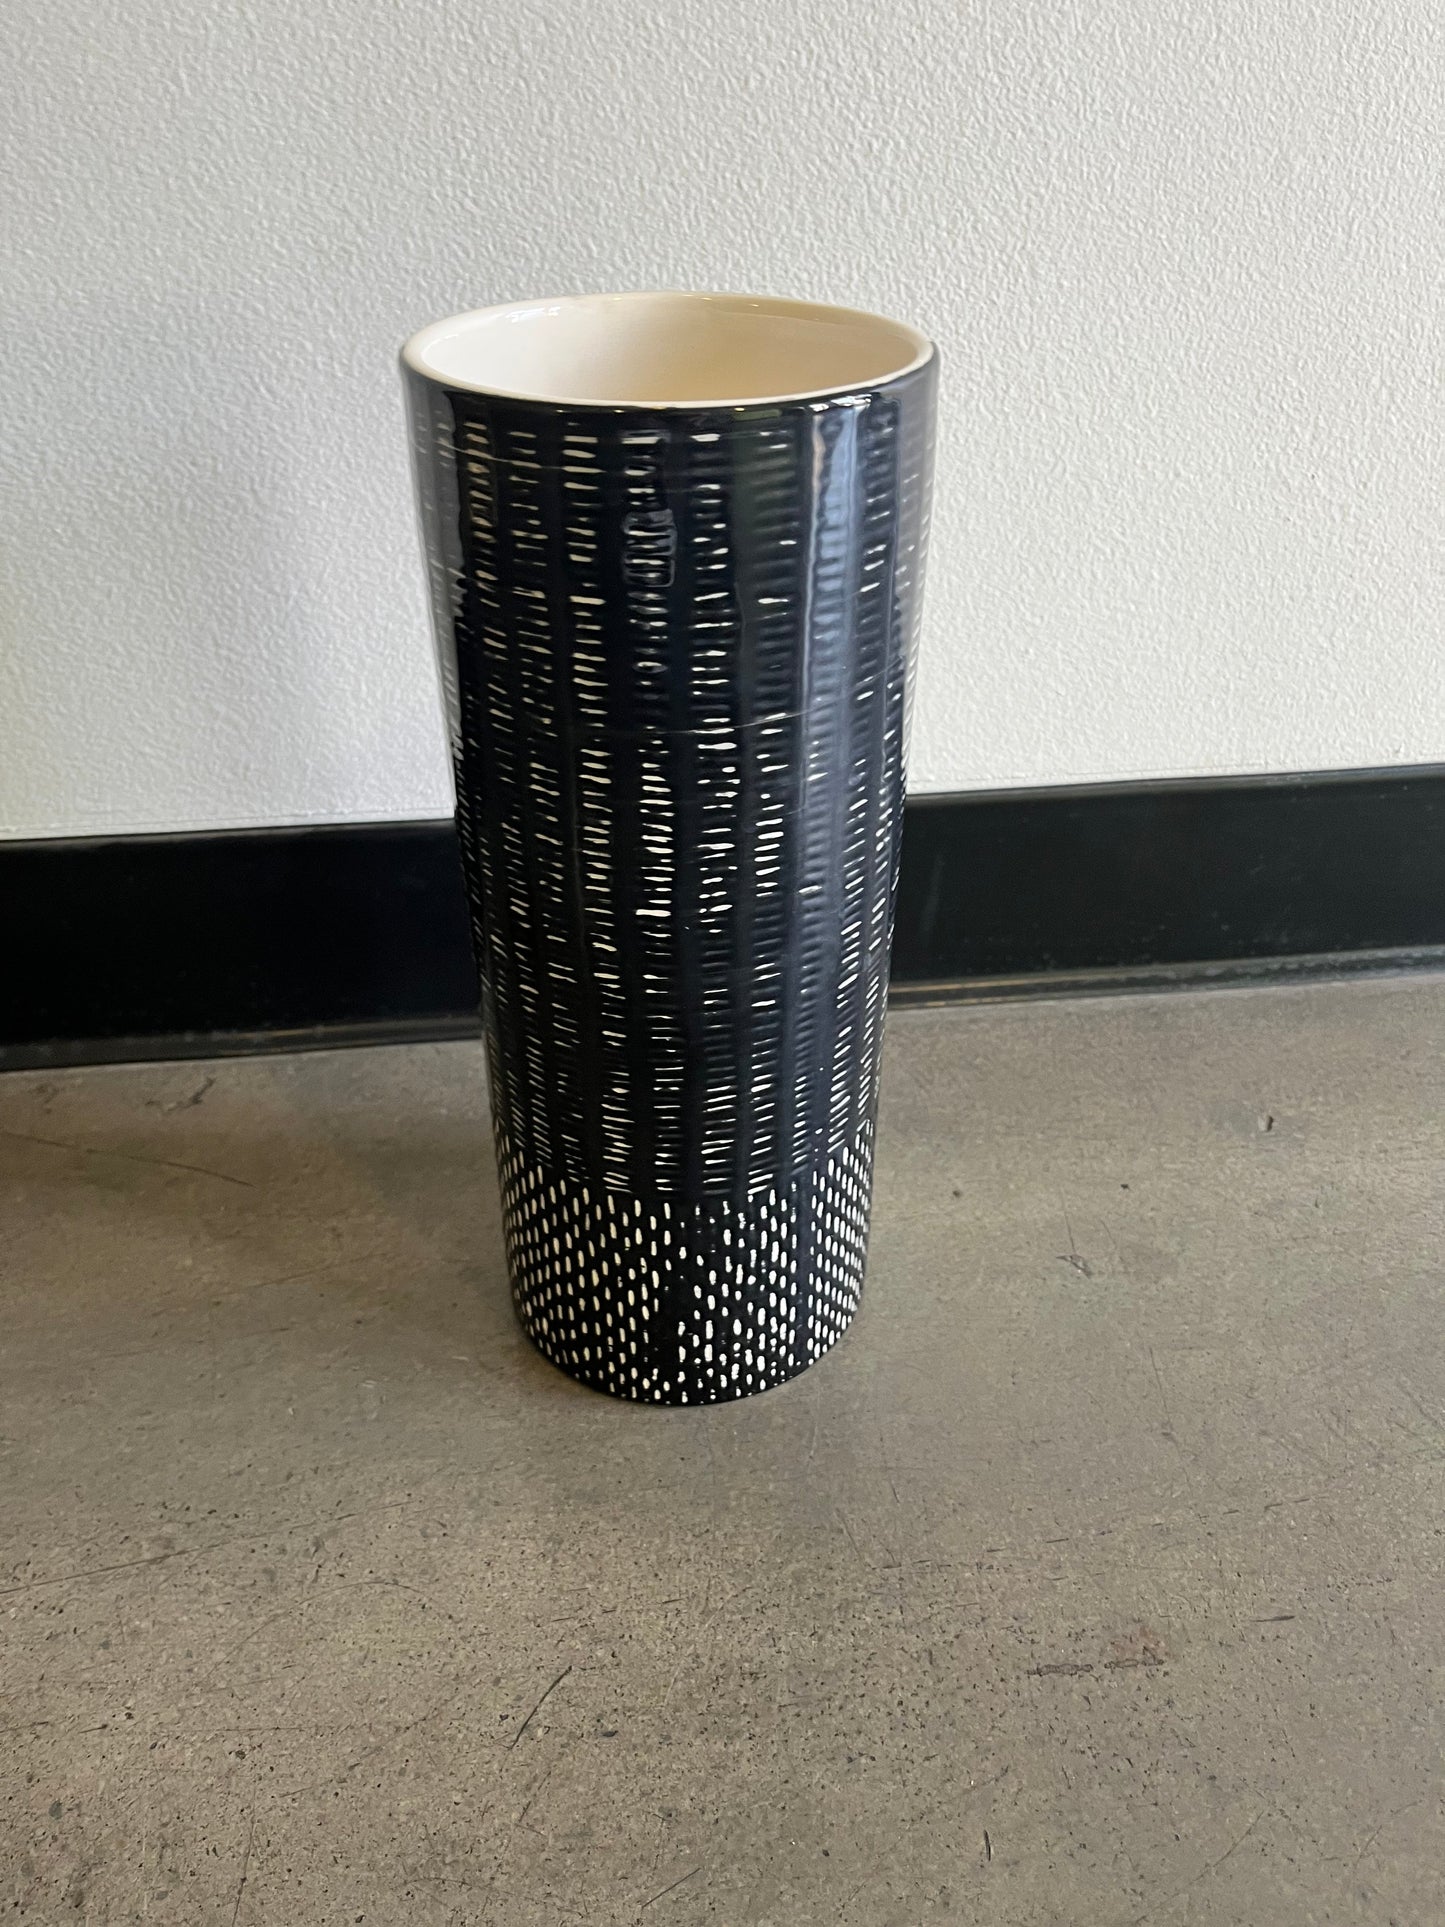 Silicon Valley: Monica's CB2 Vase